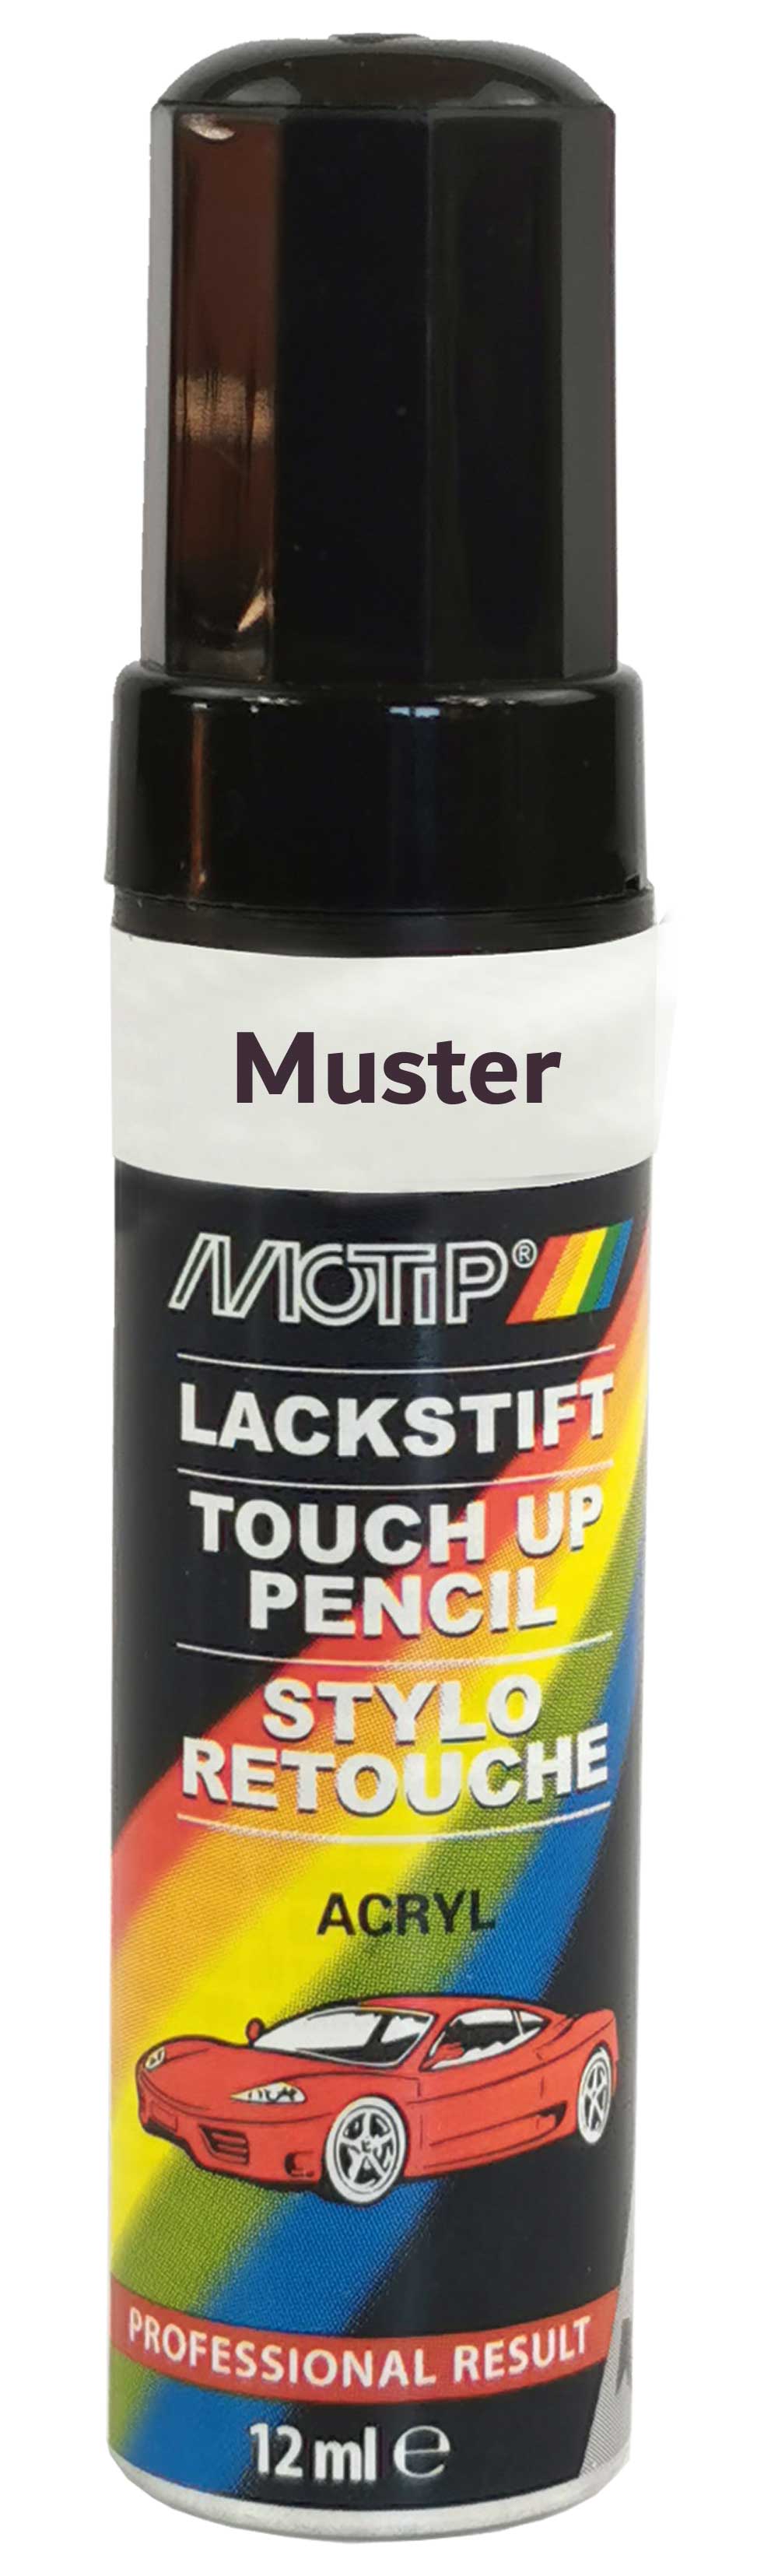 Motip Lack-Stift grau 12ml 951079